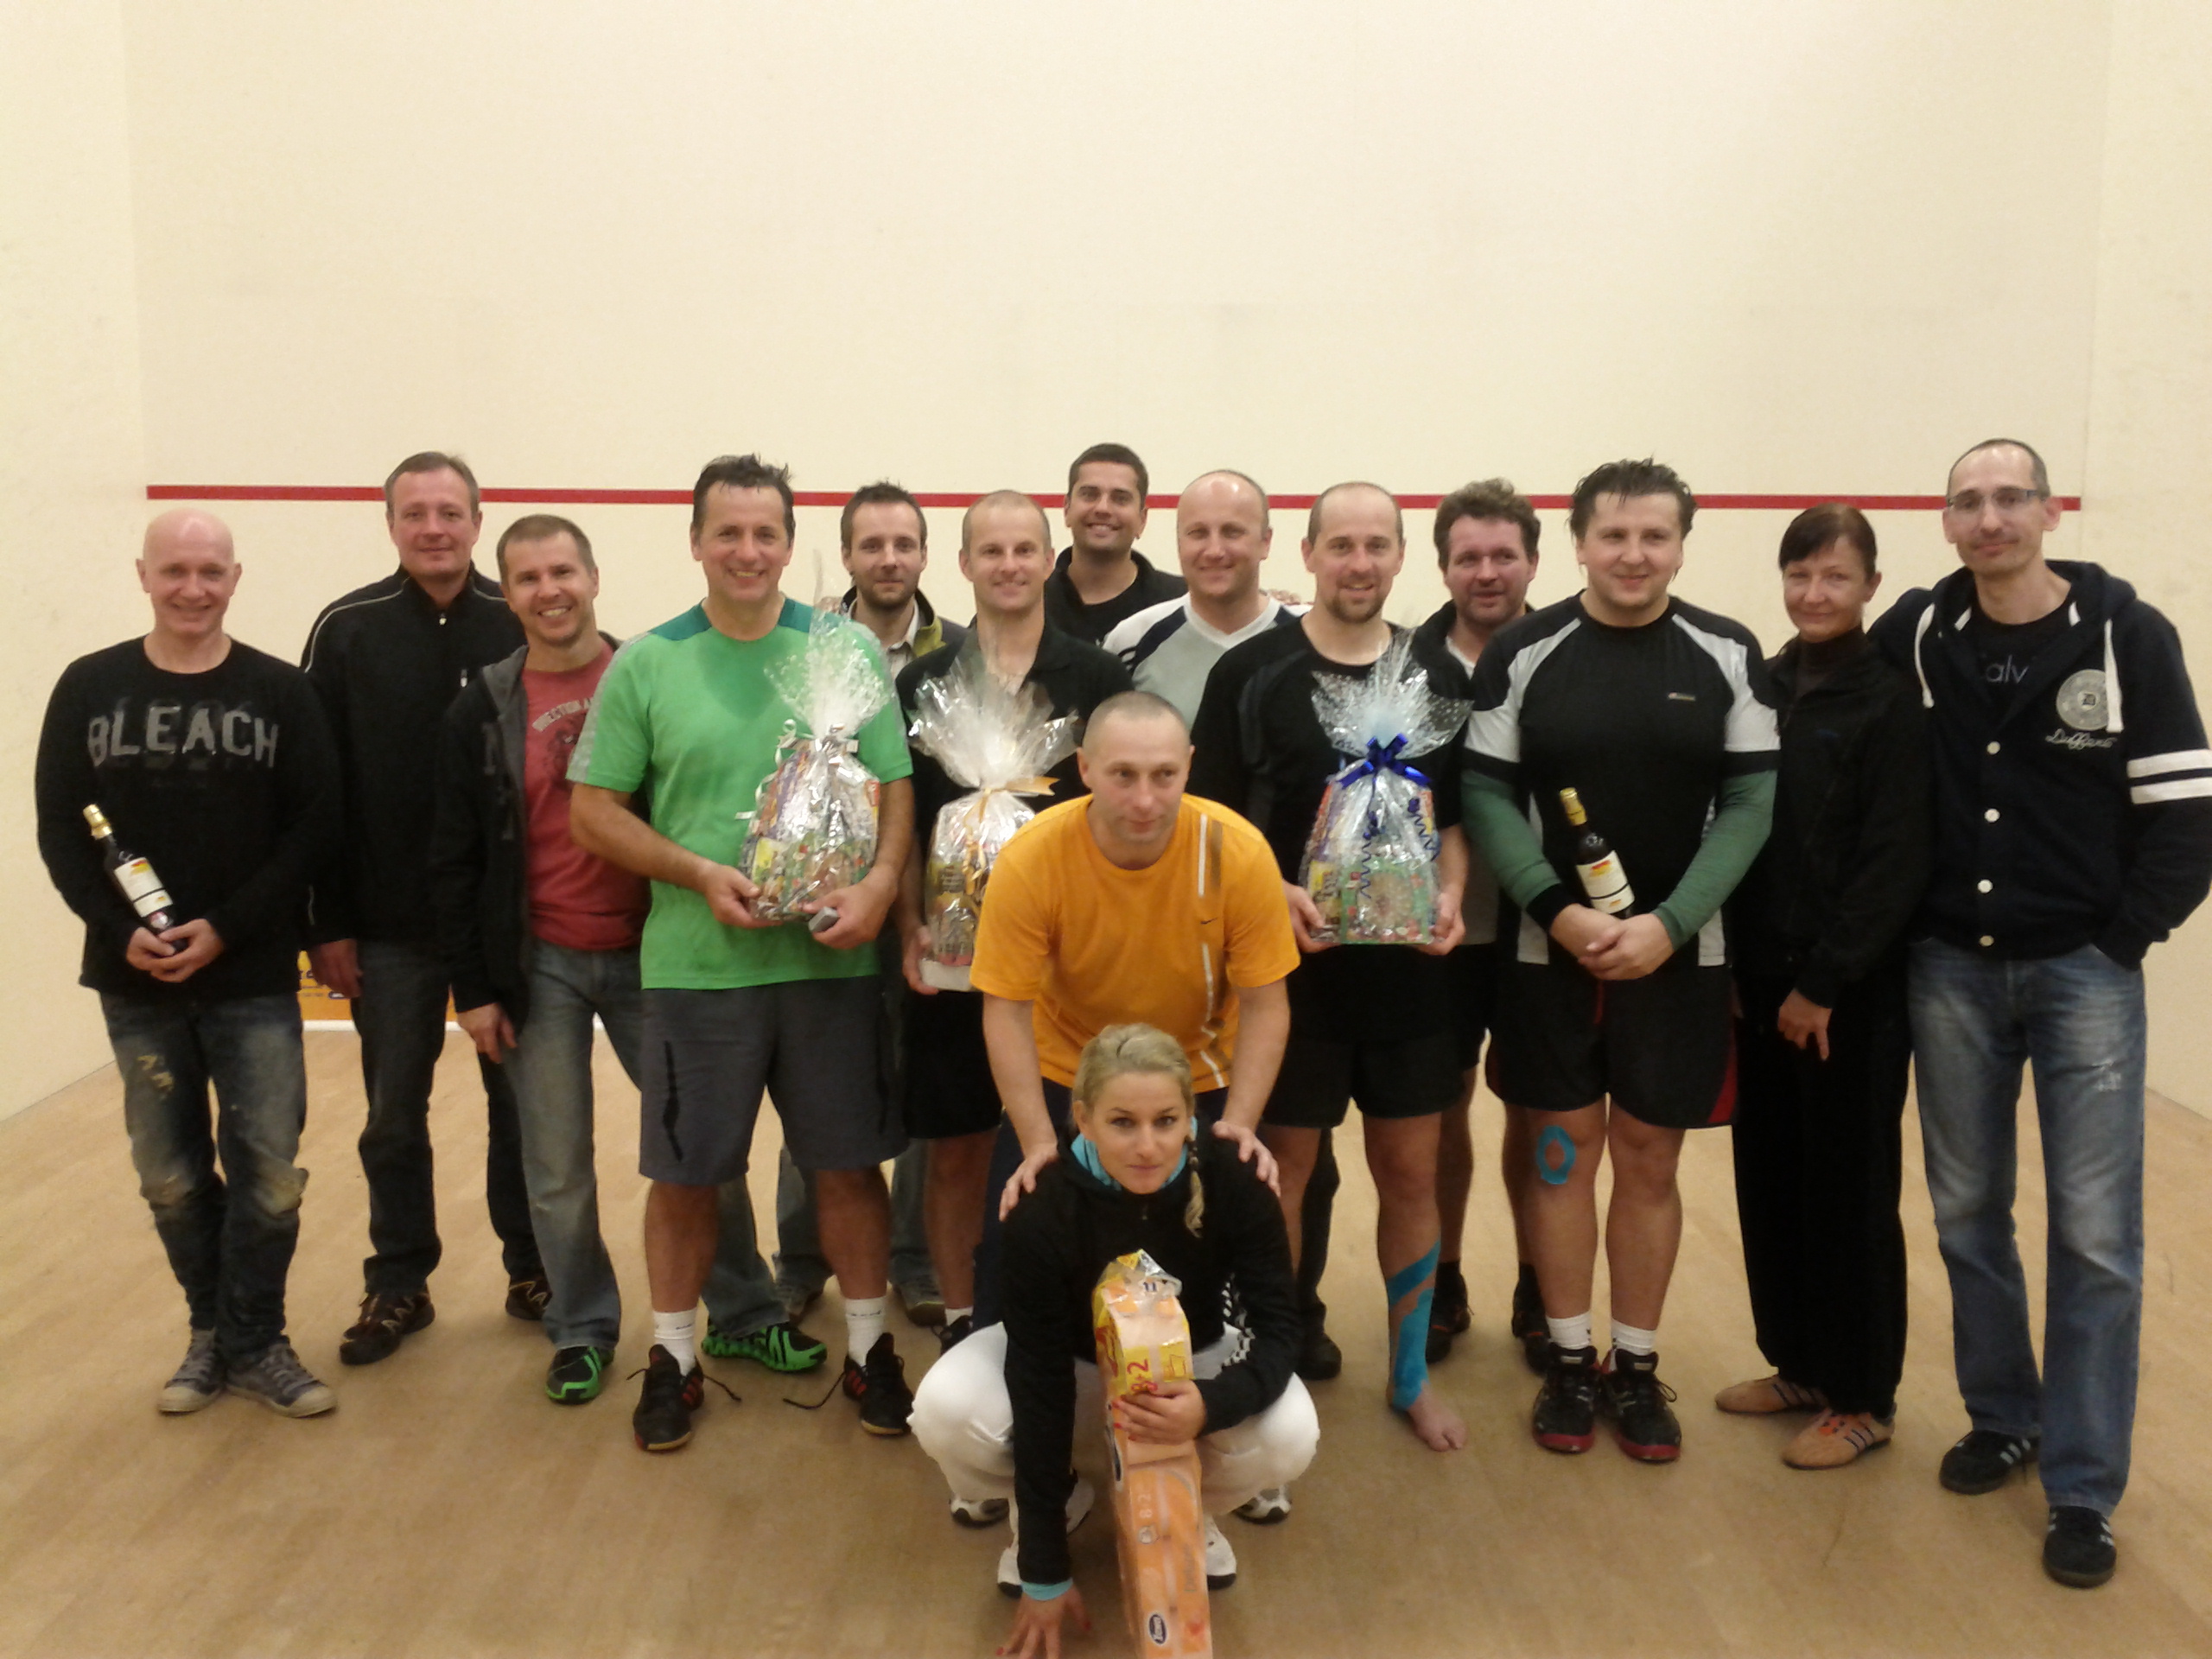 Squash –squashové turnaje Ecosun Tour 2013, Ostrava – Zábřeh, centrum Havránek